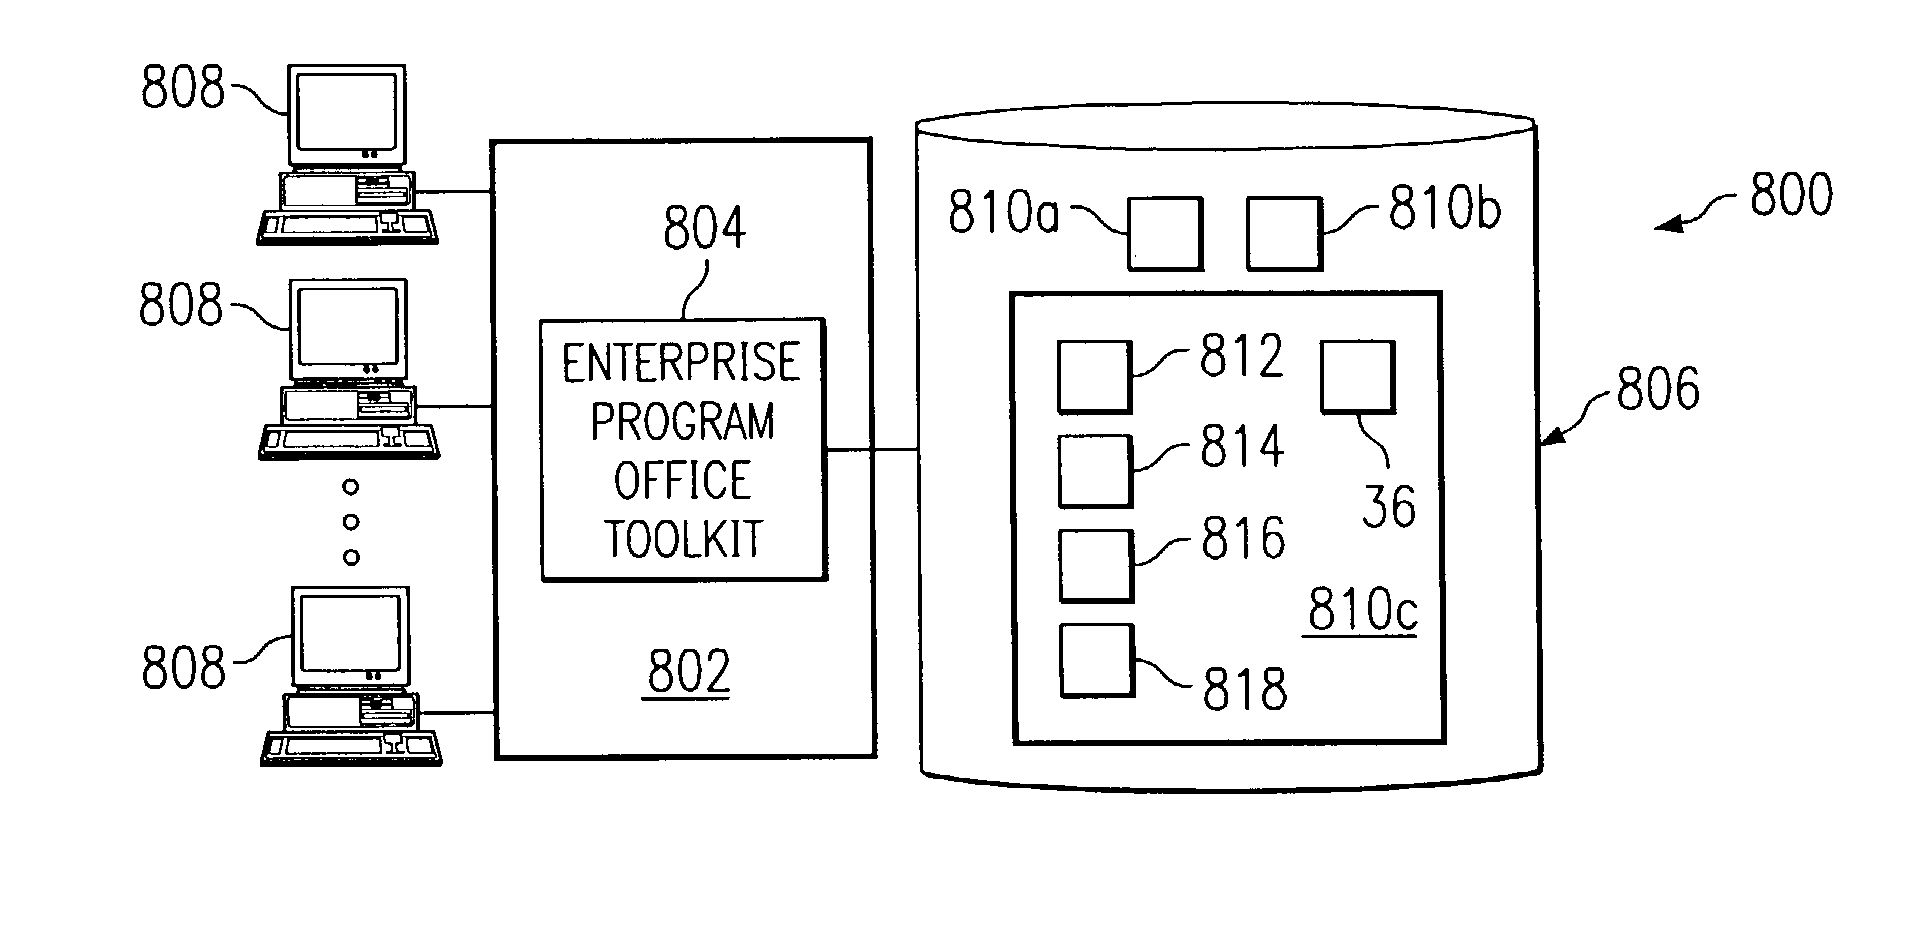 Enterprise management using an enterprise program office (EPO)